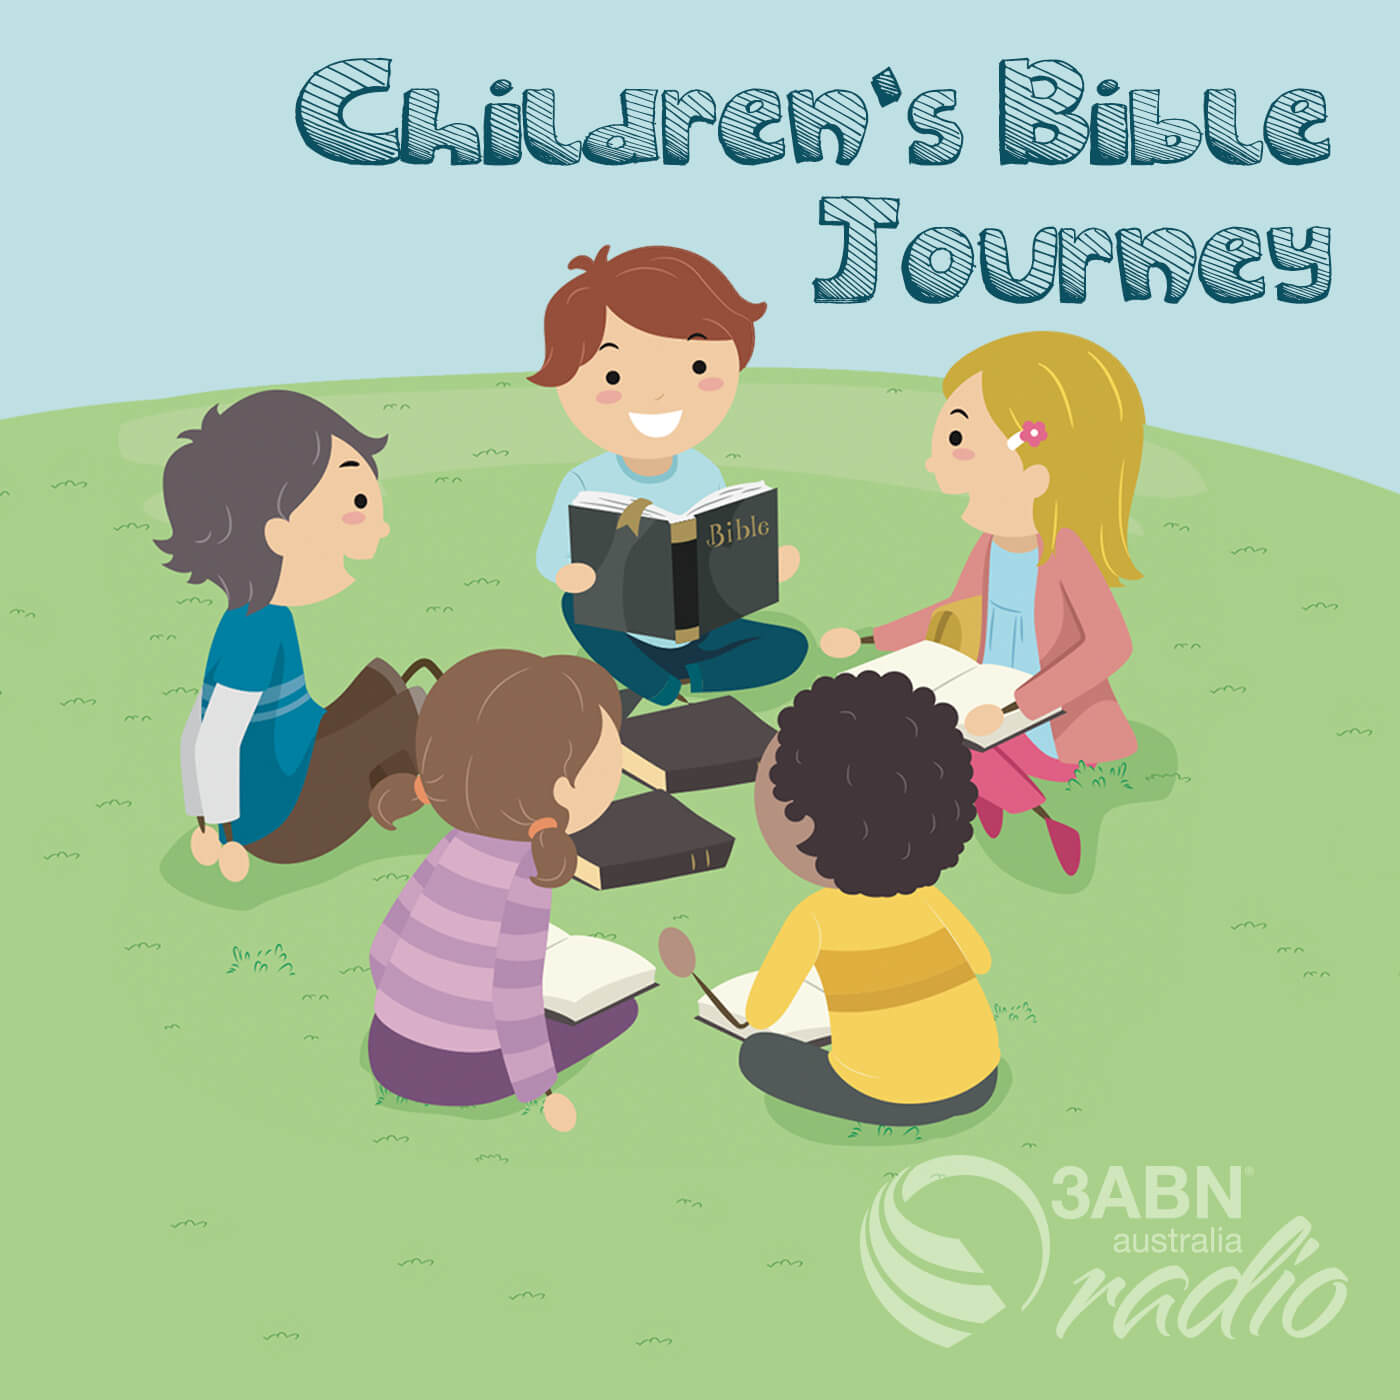 Children's Bible Journey - 2201